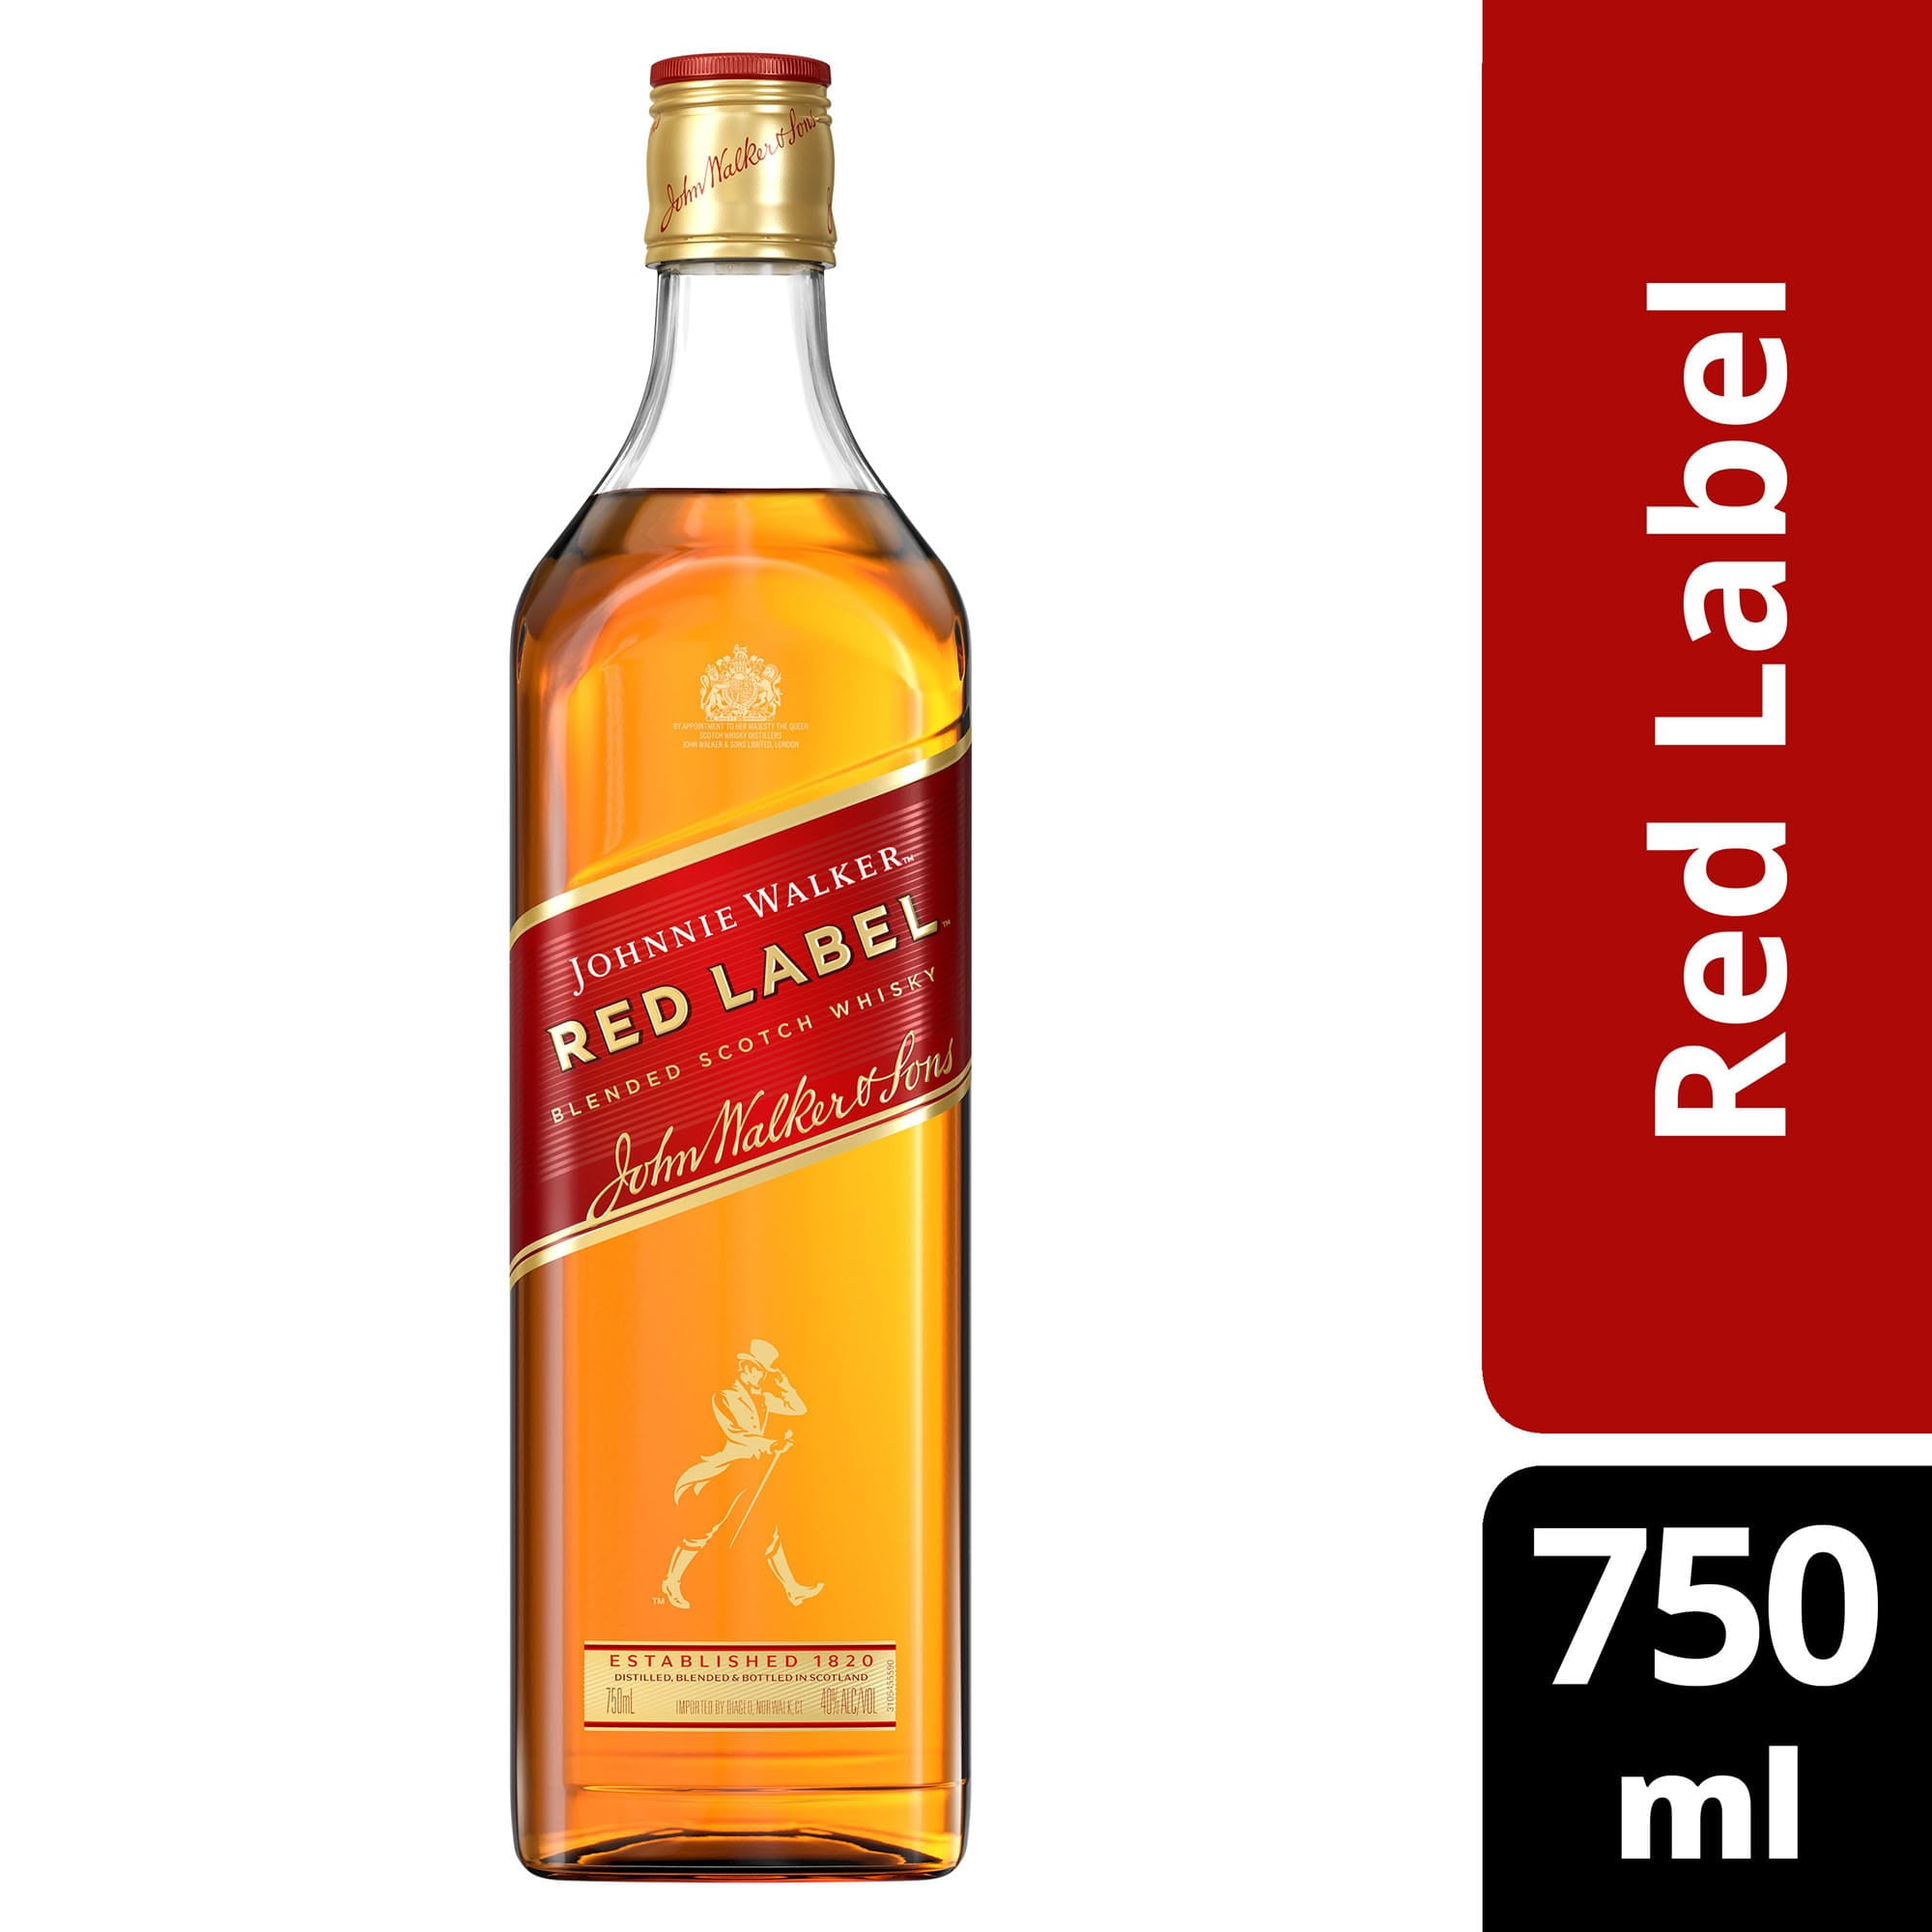 Carry Daar Correctie Johnnie Walker Red Label Blended Scotch Whisky, 750 mL, 40% ABV -  Walmart.com